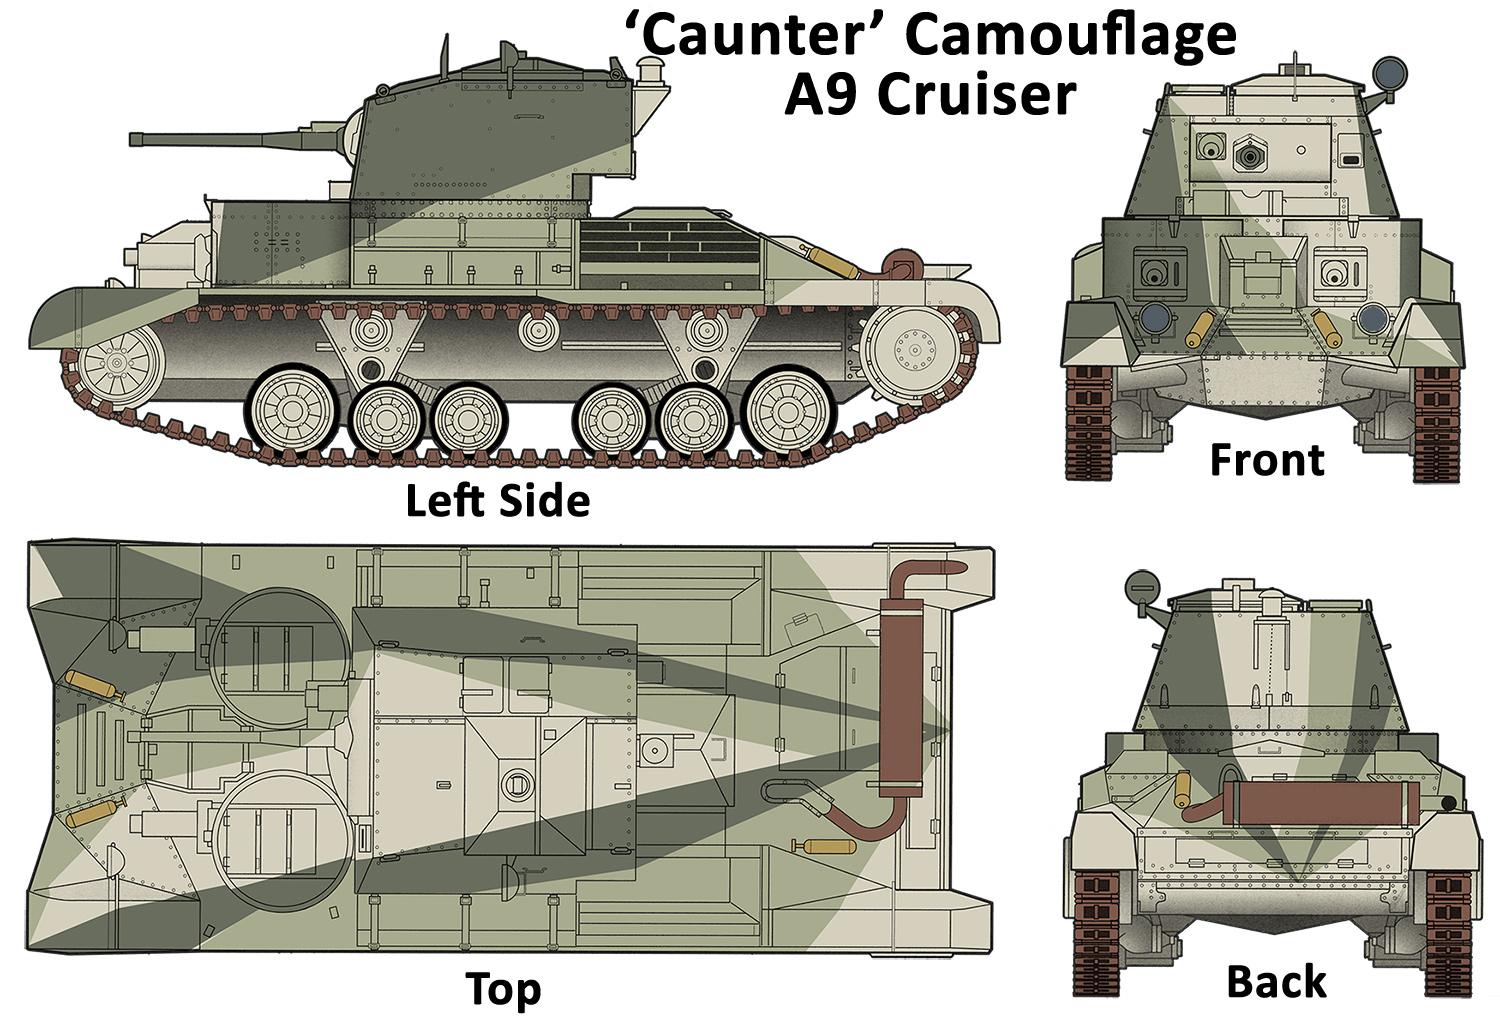 'Caunter' Camouflage A9 Cruiser tank